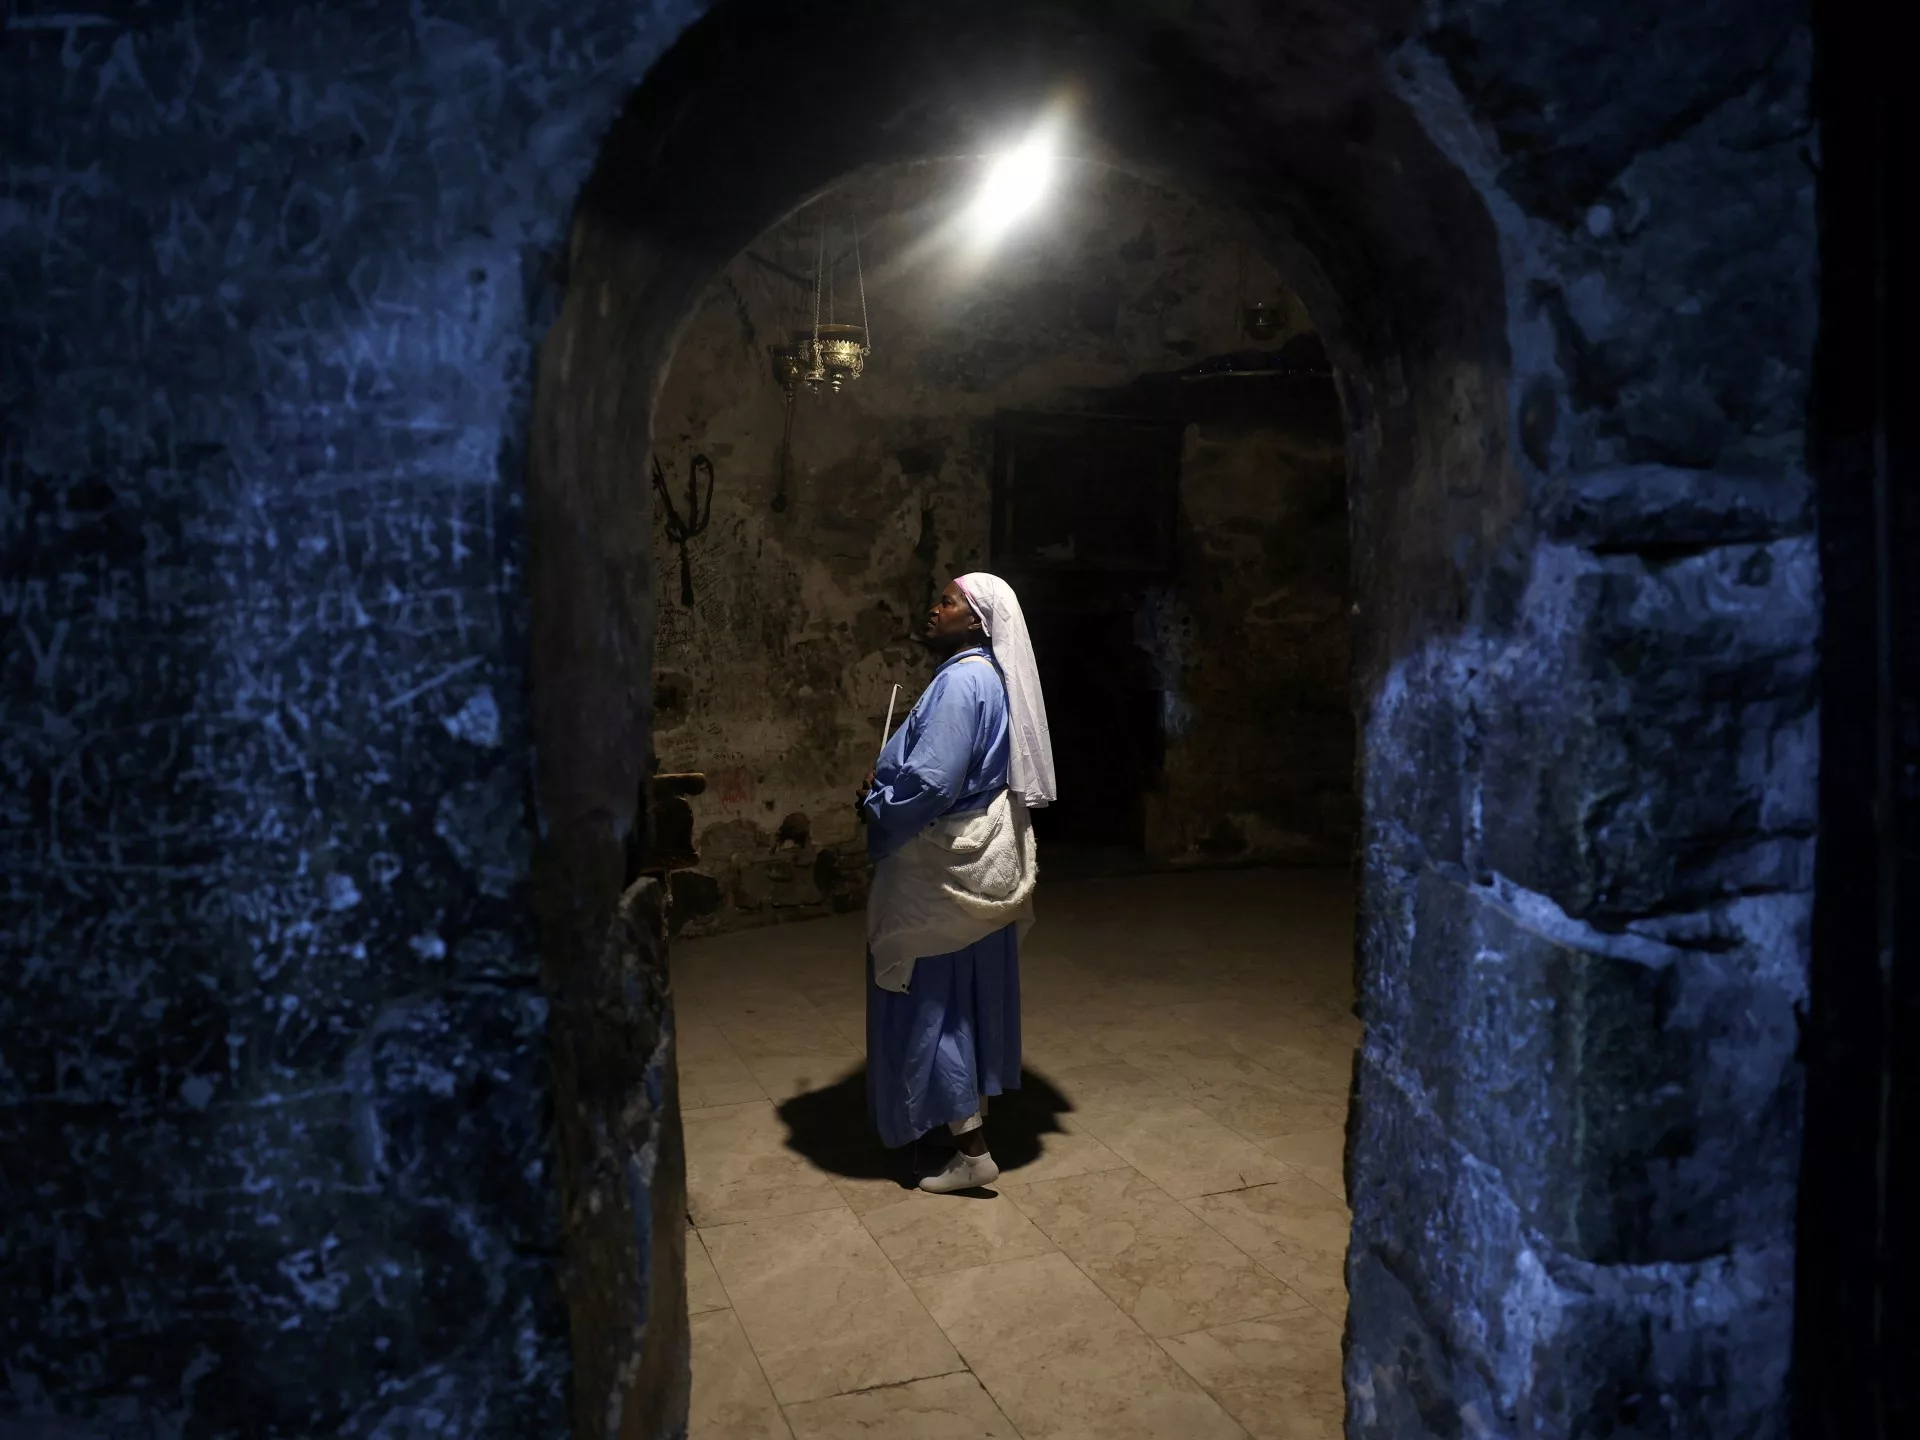 Palestinian Christians barred from Jerusalem’s Old City at Easter | Israel War on Gaza News